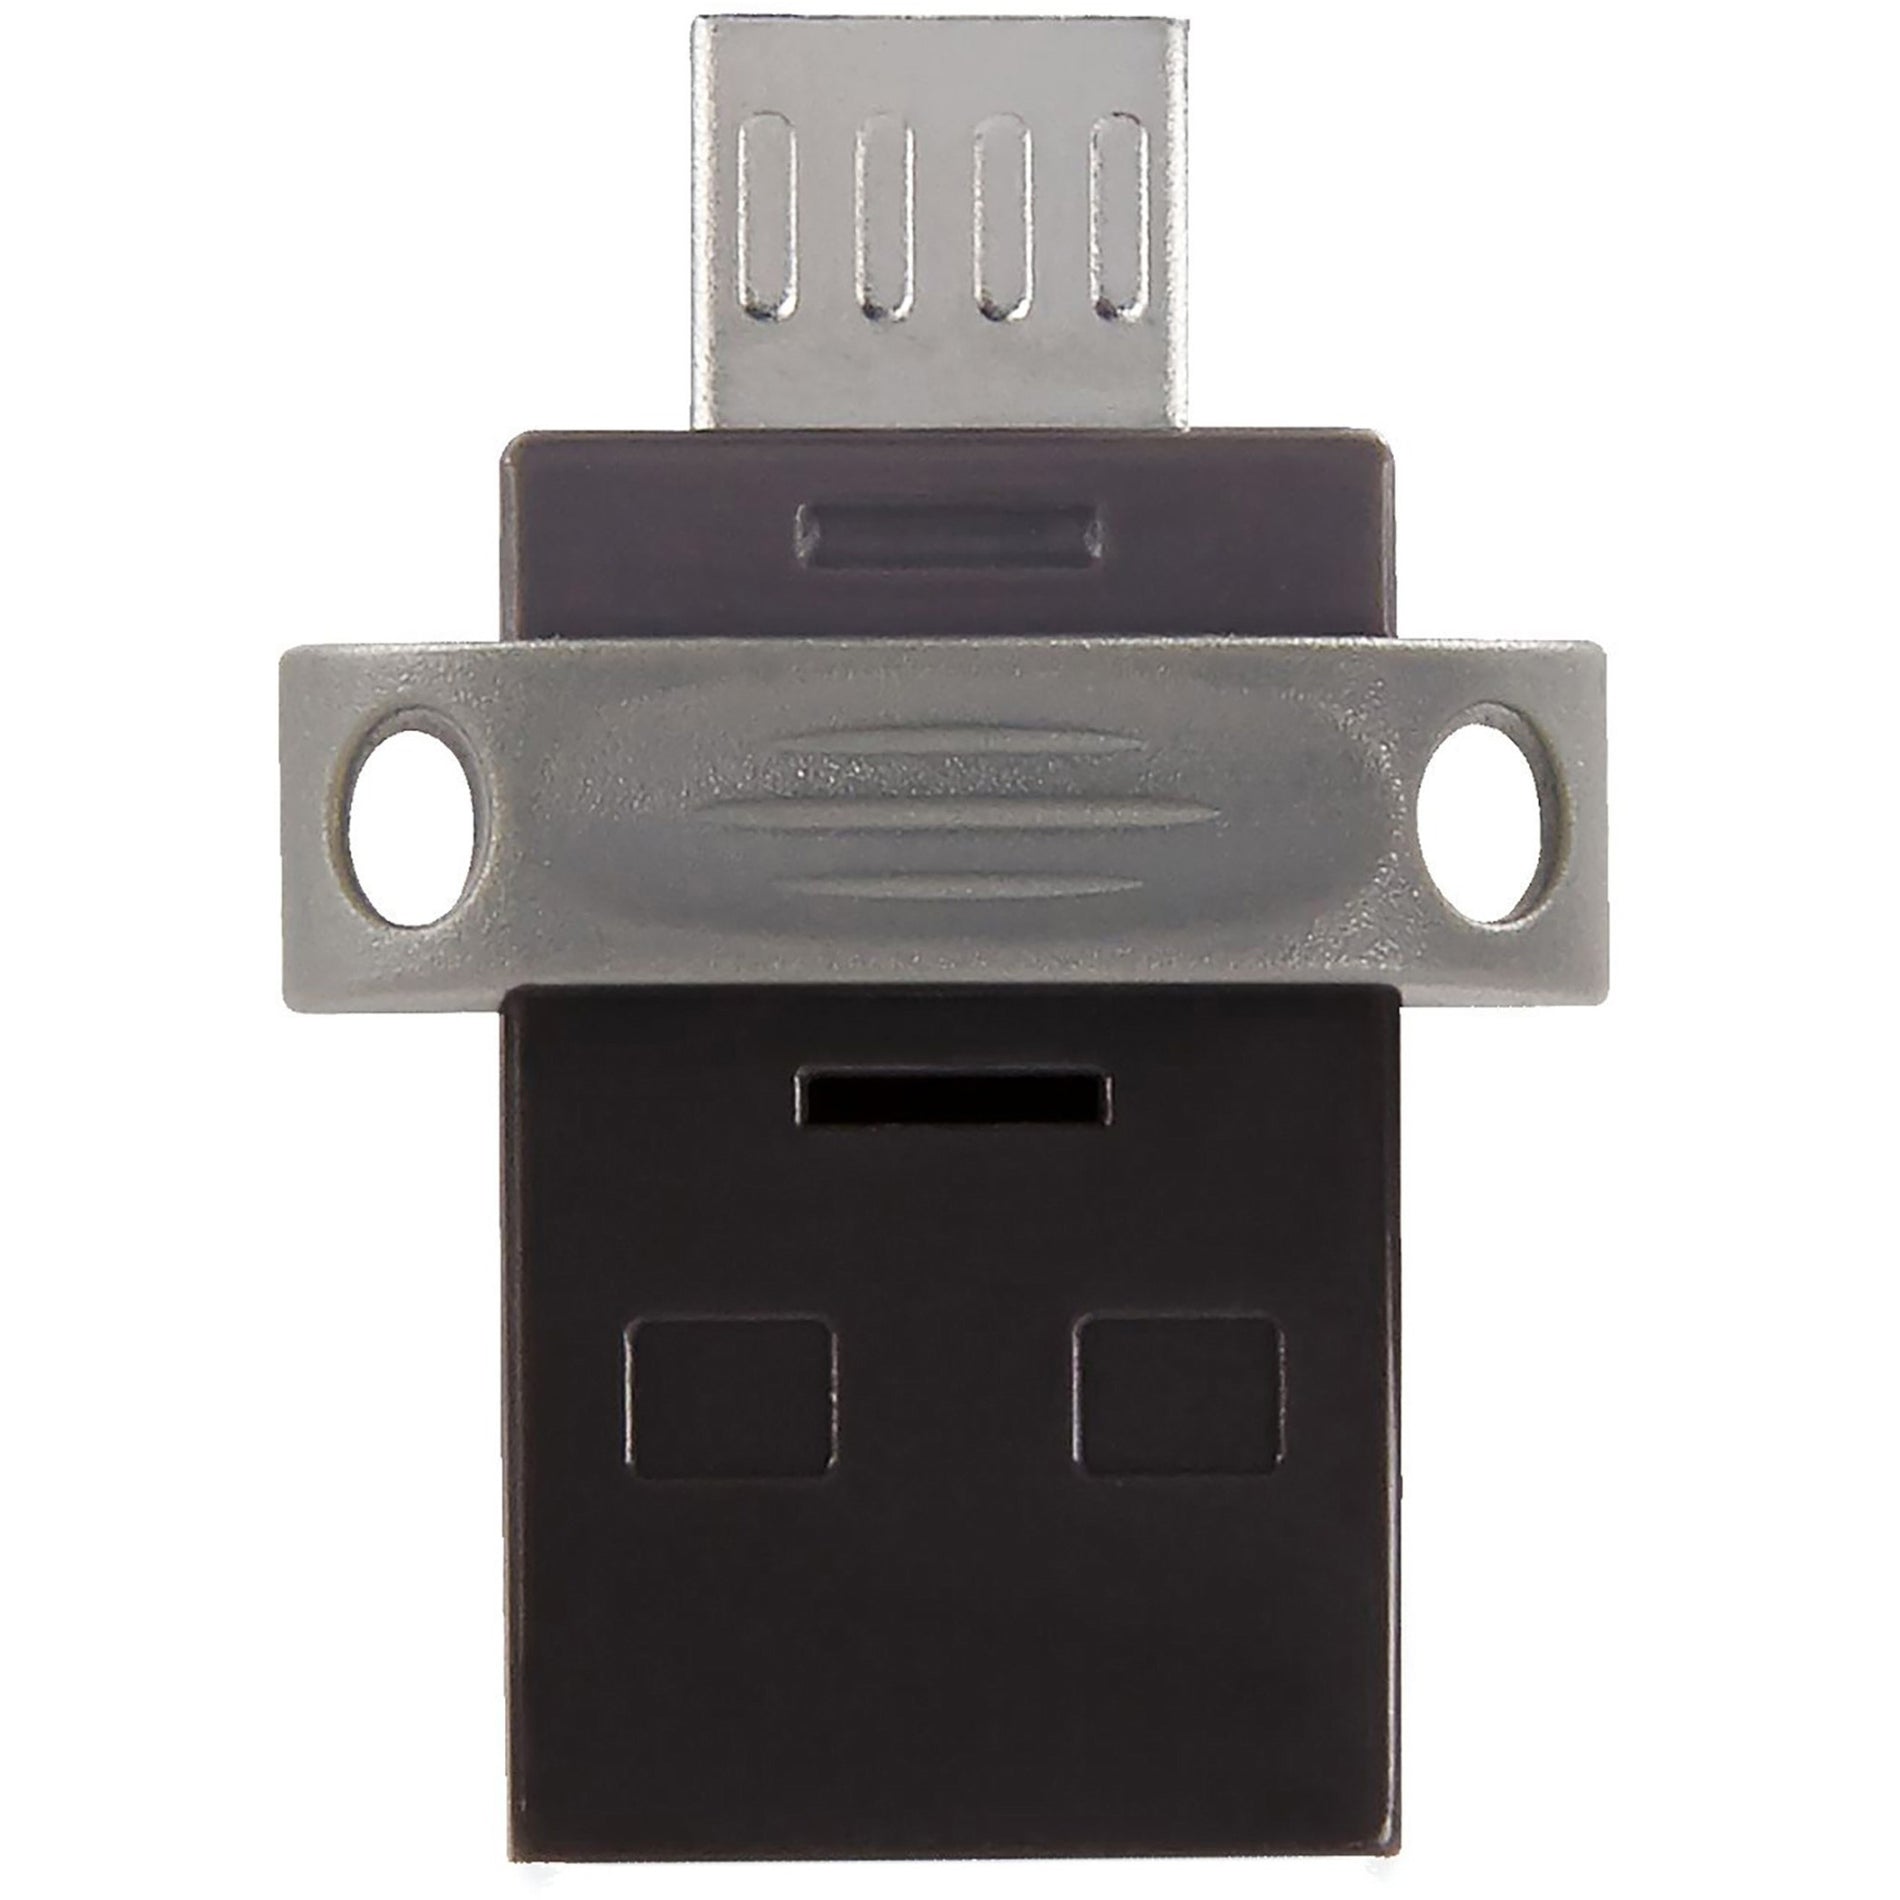 Verbatim 99140 Store 'n' Go Dual USB Flash Drive 64GB Black/Gray